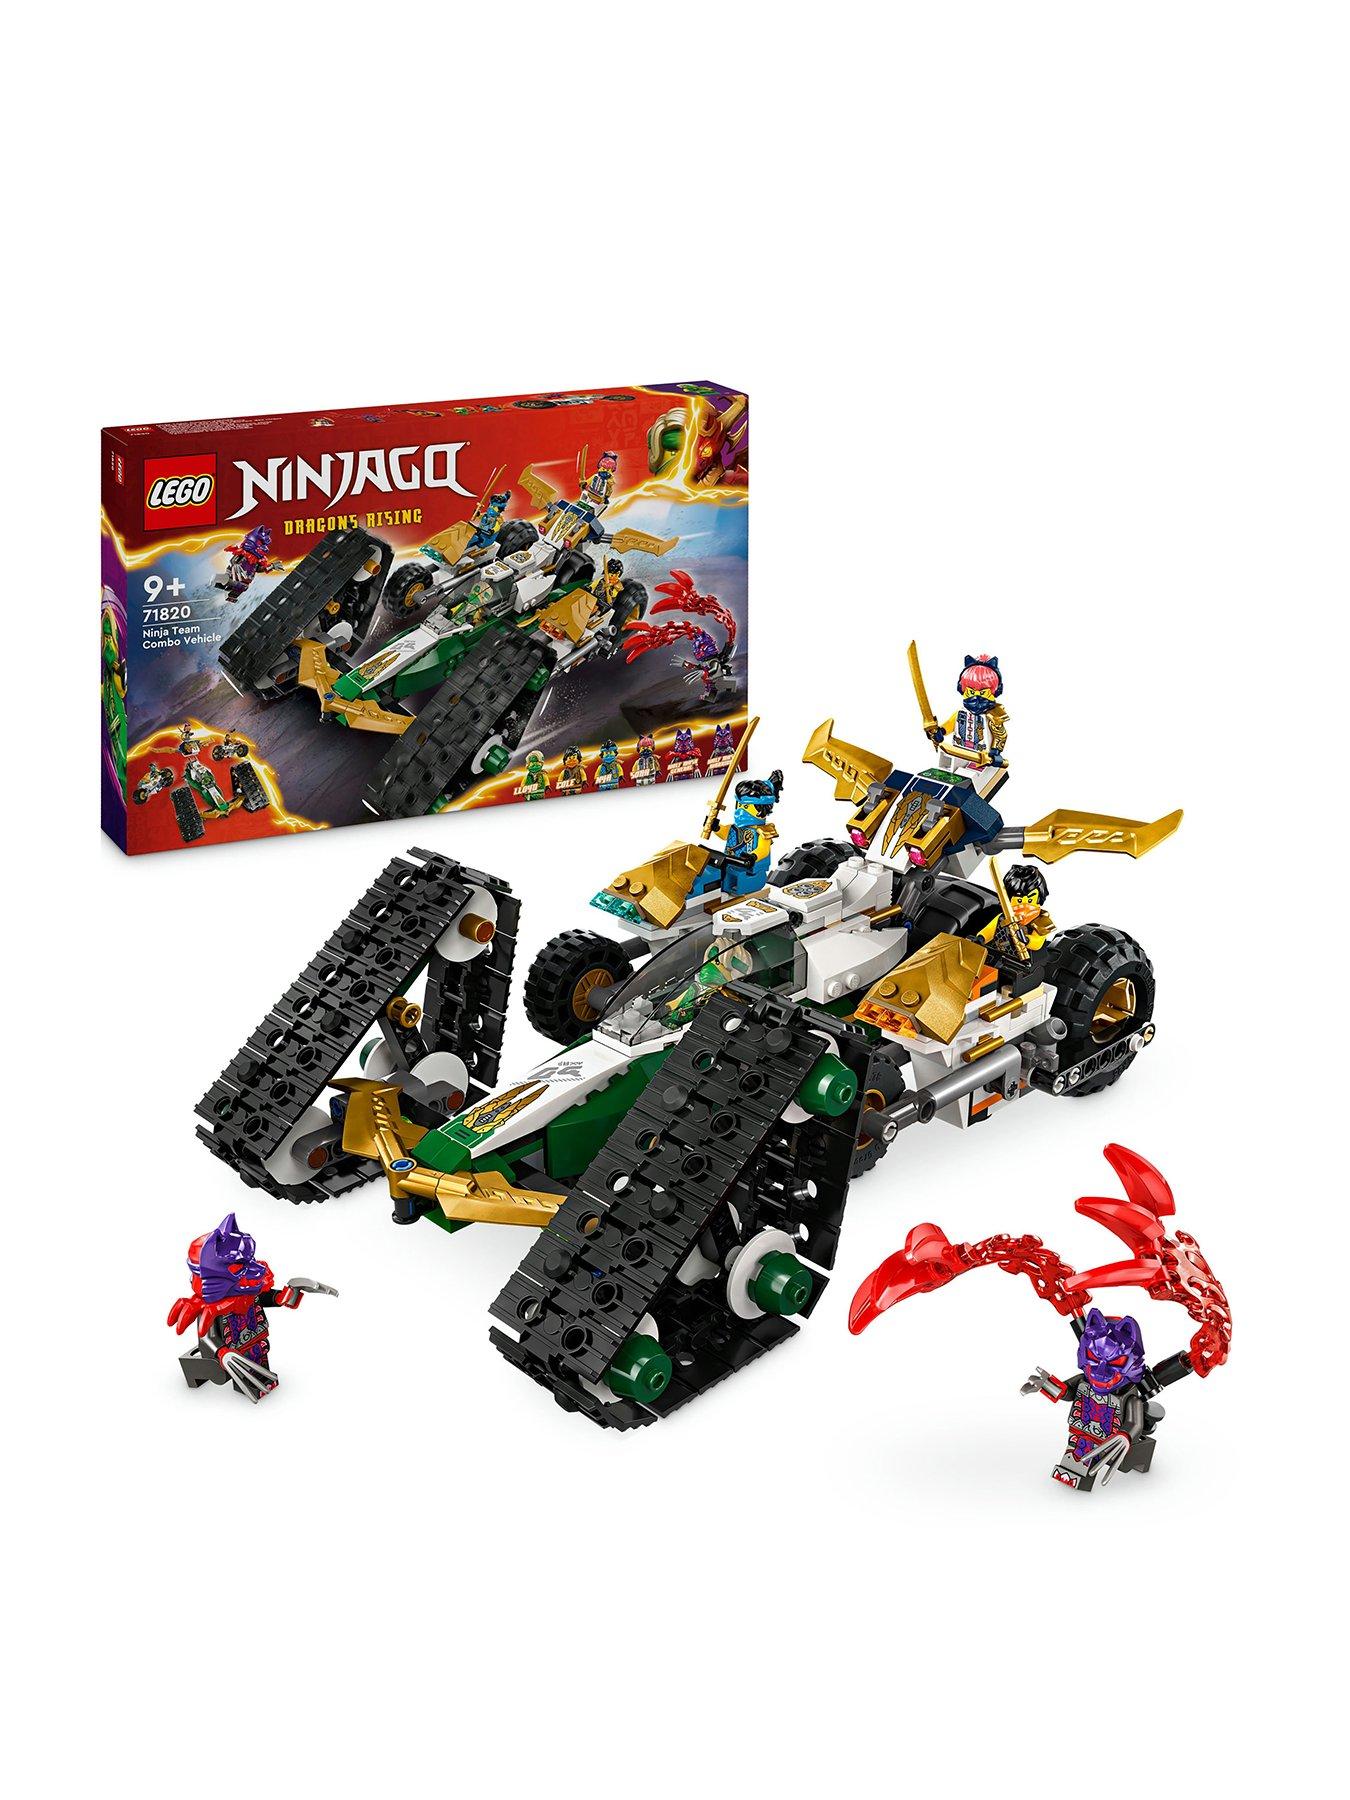 Lego Ninjago Ninja Team Combo Vehicle Toy Set 71820